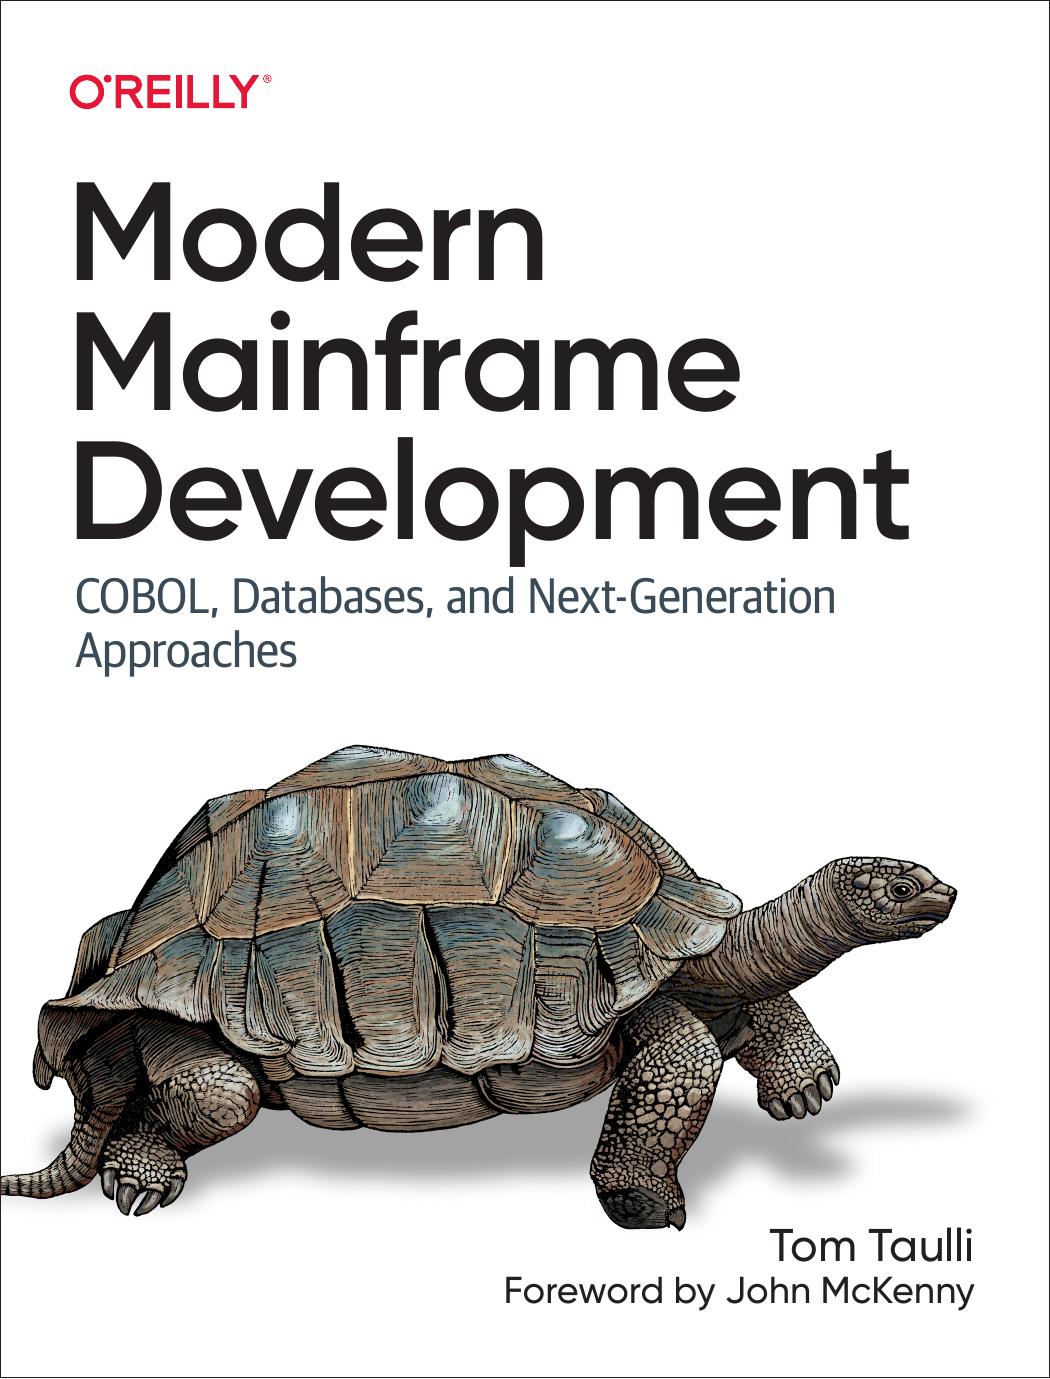 Modern Mainframe Development by Tom Taulli